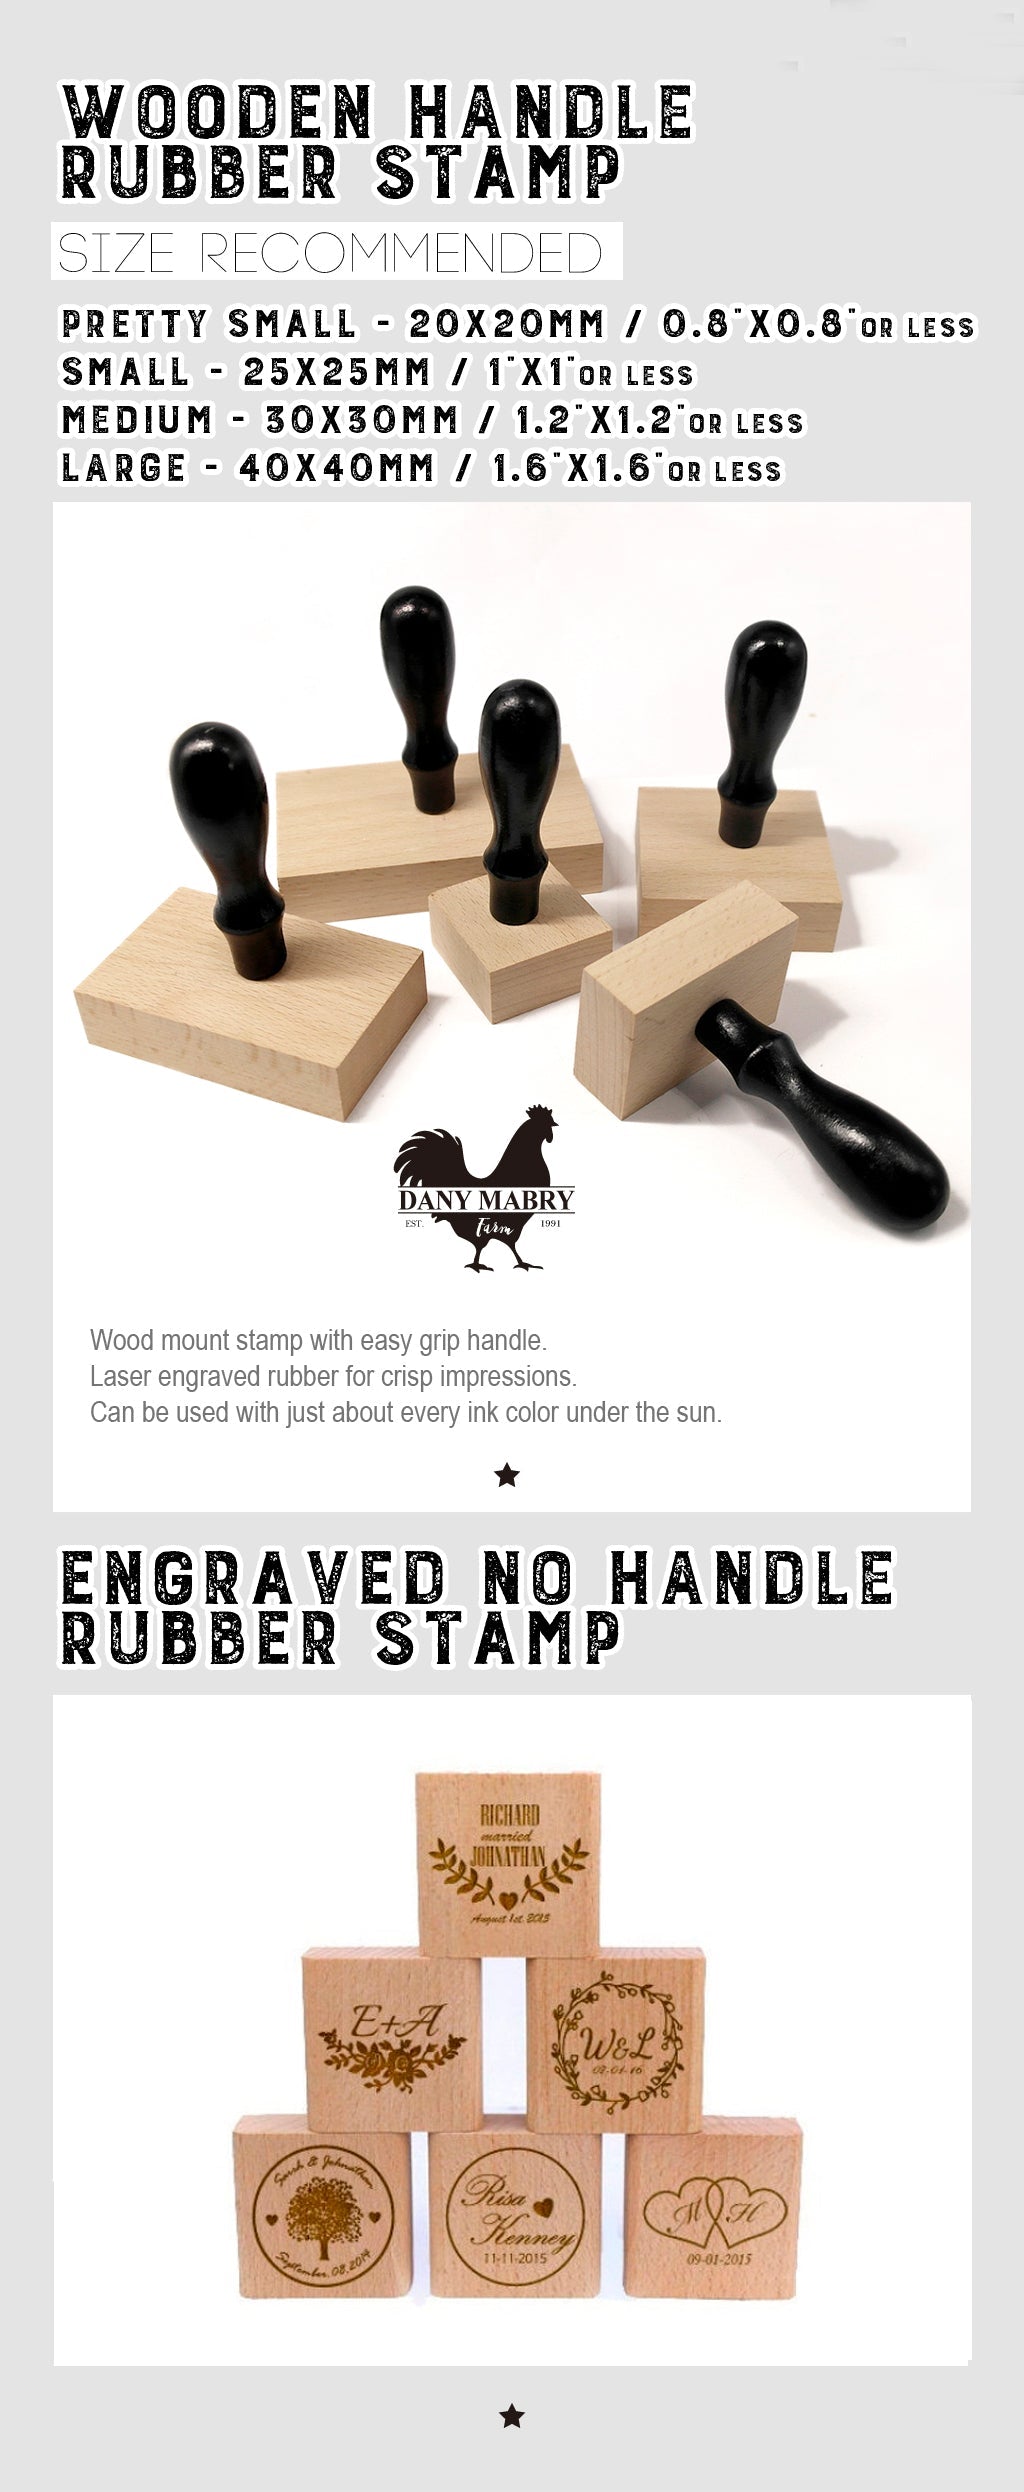 Custom Egg Stamp with Farm Name – sealingwaxstamp